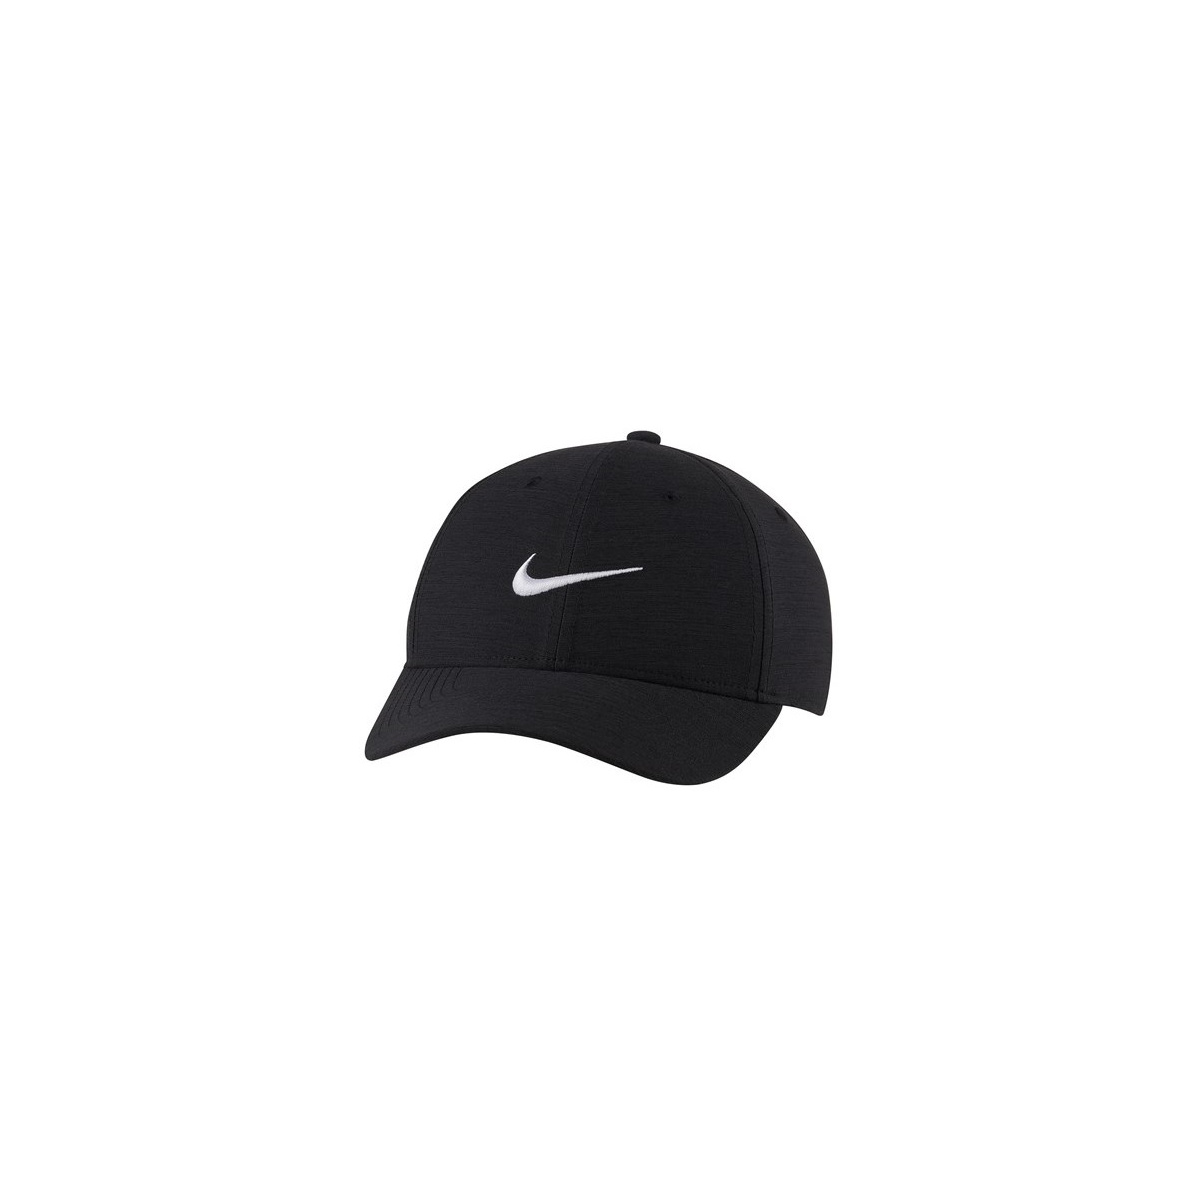 Casquette Baseball Strapback Golfer Blanc - Nike Reference : 593